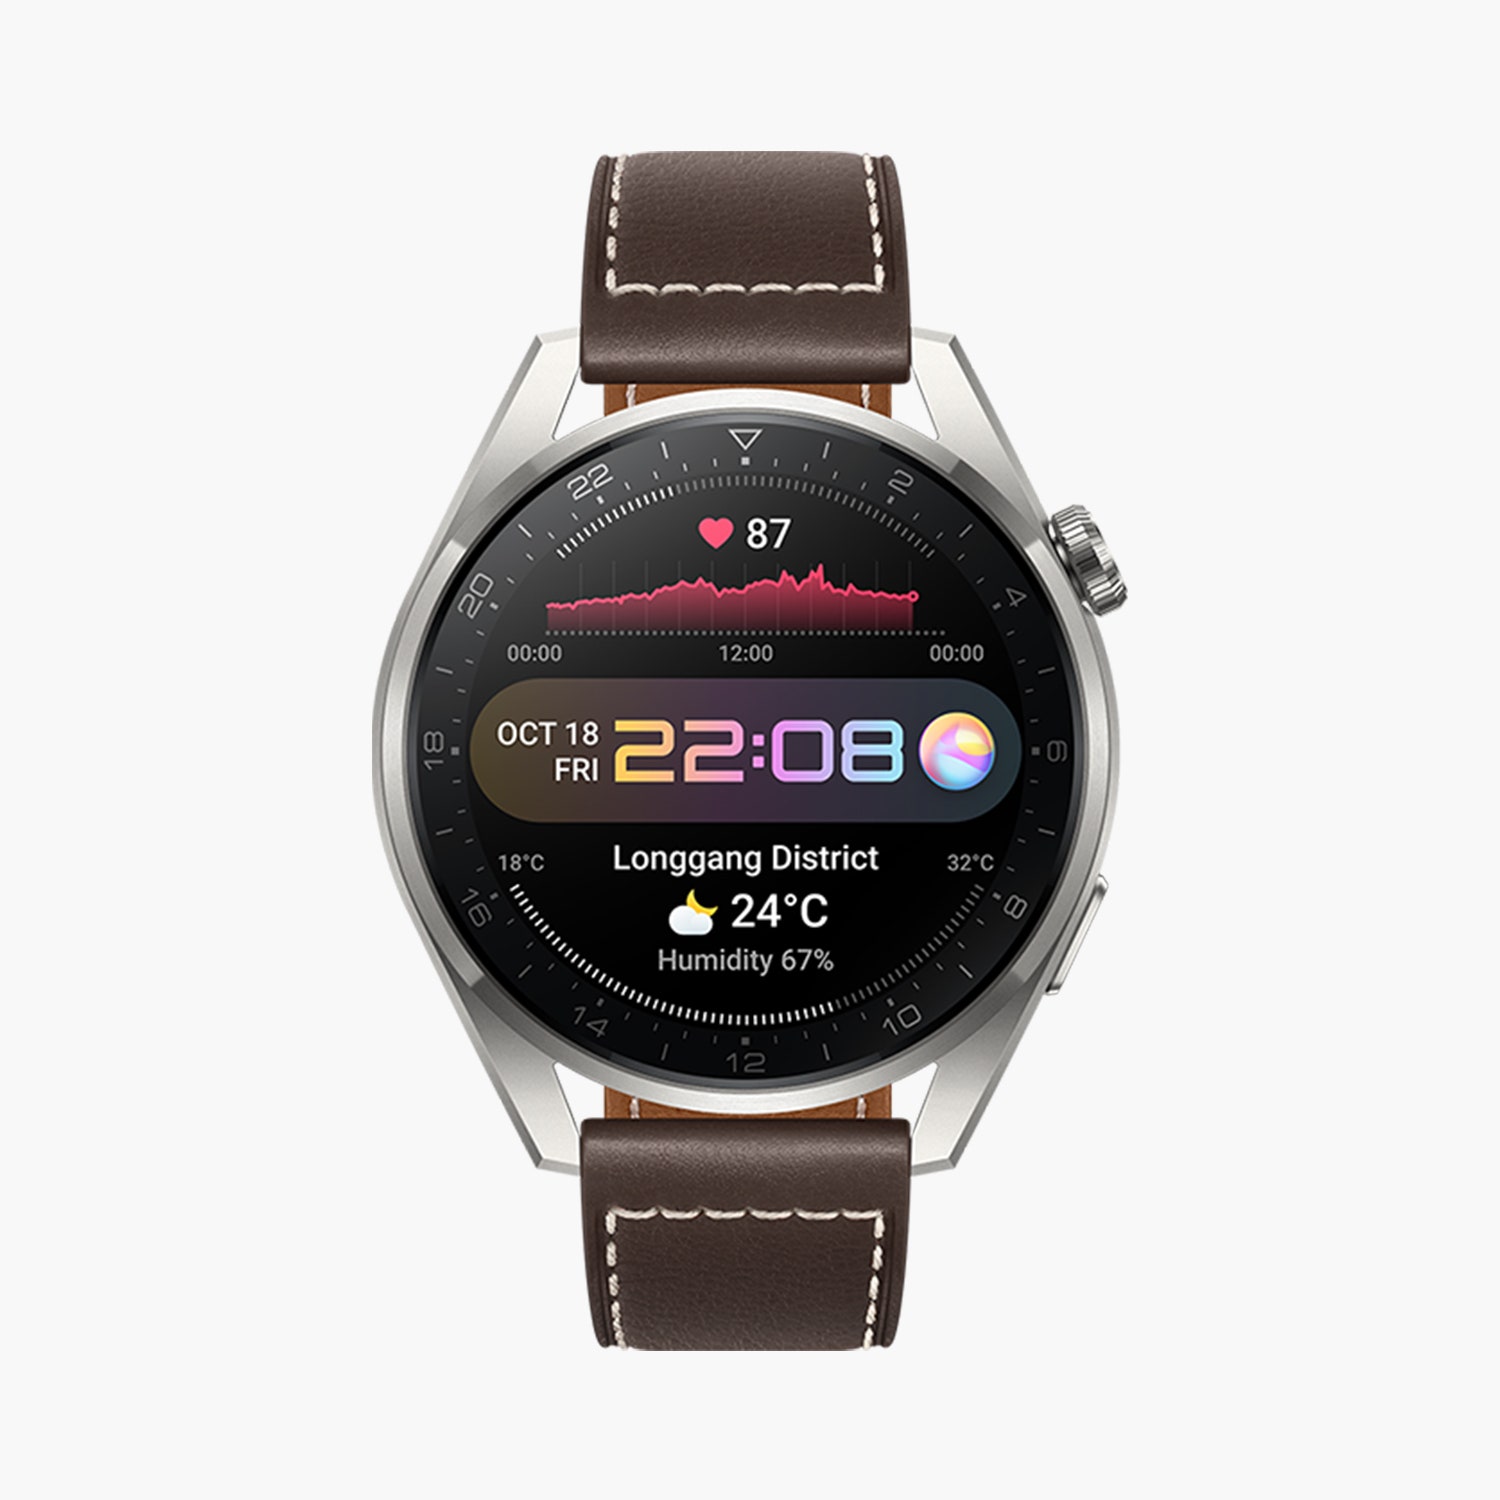 Смартчасы Huawei Watch 3 Pro 31999 рублей consumer.huawei.com